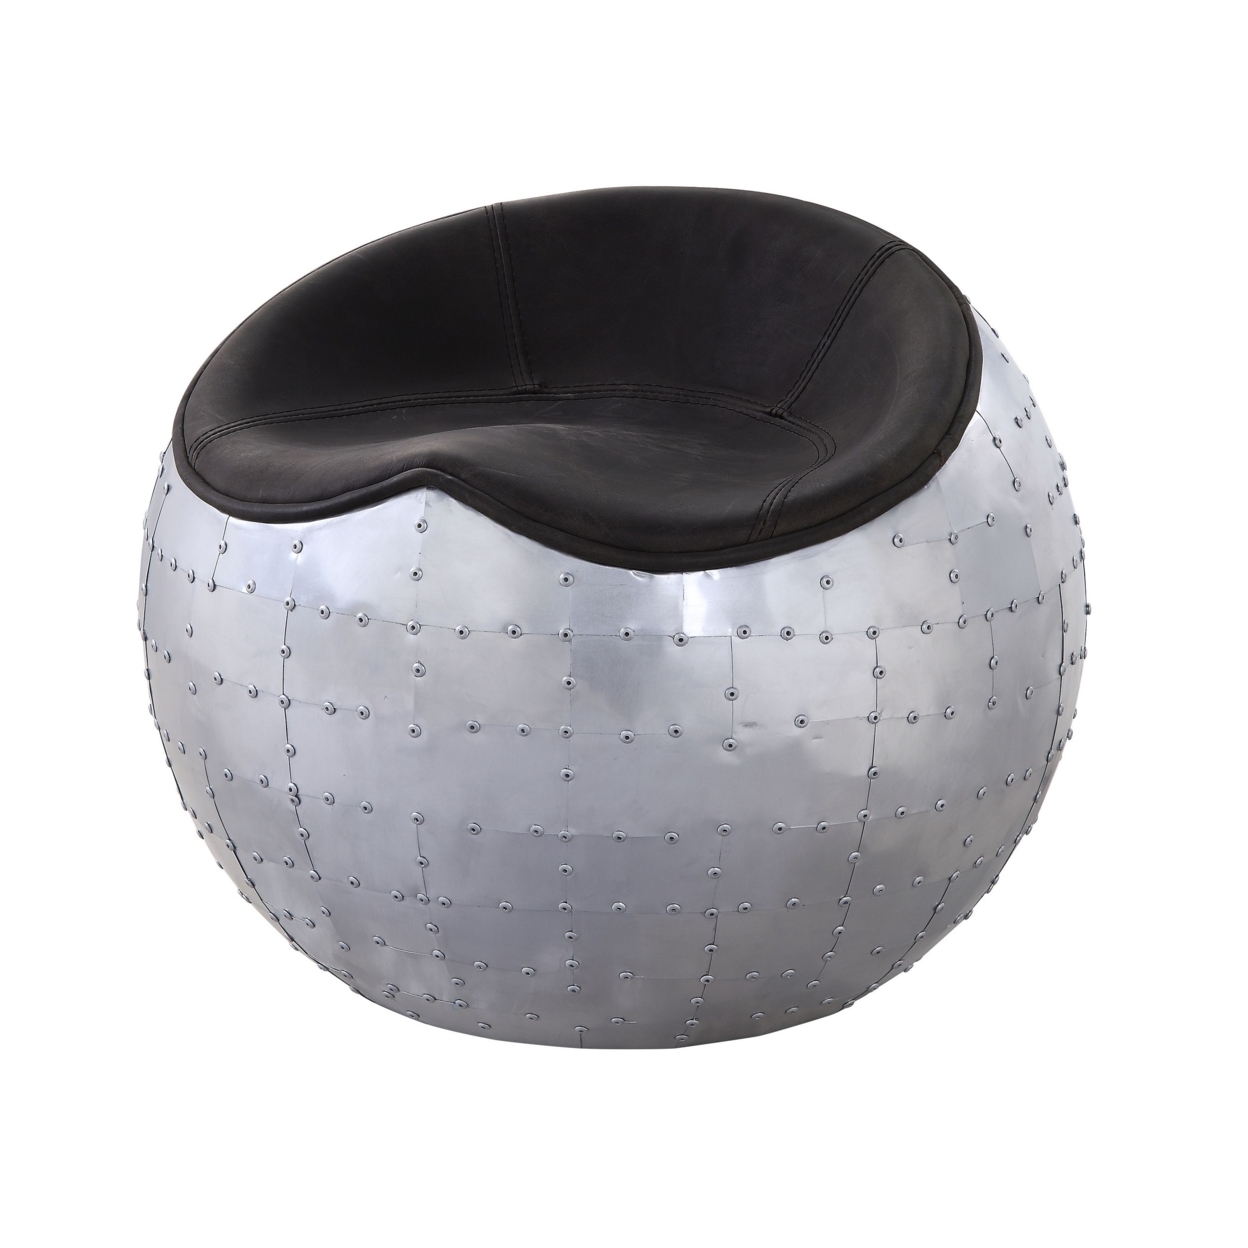 Spherical Metal Ottoman With Leatherette Saddle Seat, Gray And Black- Saltoro Sherpi